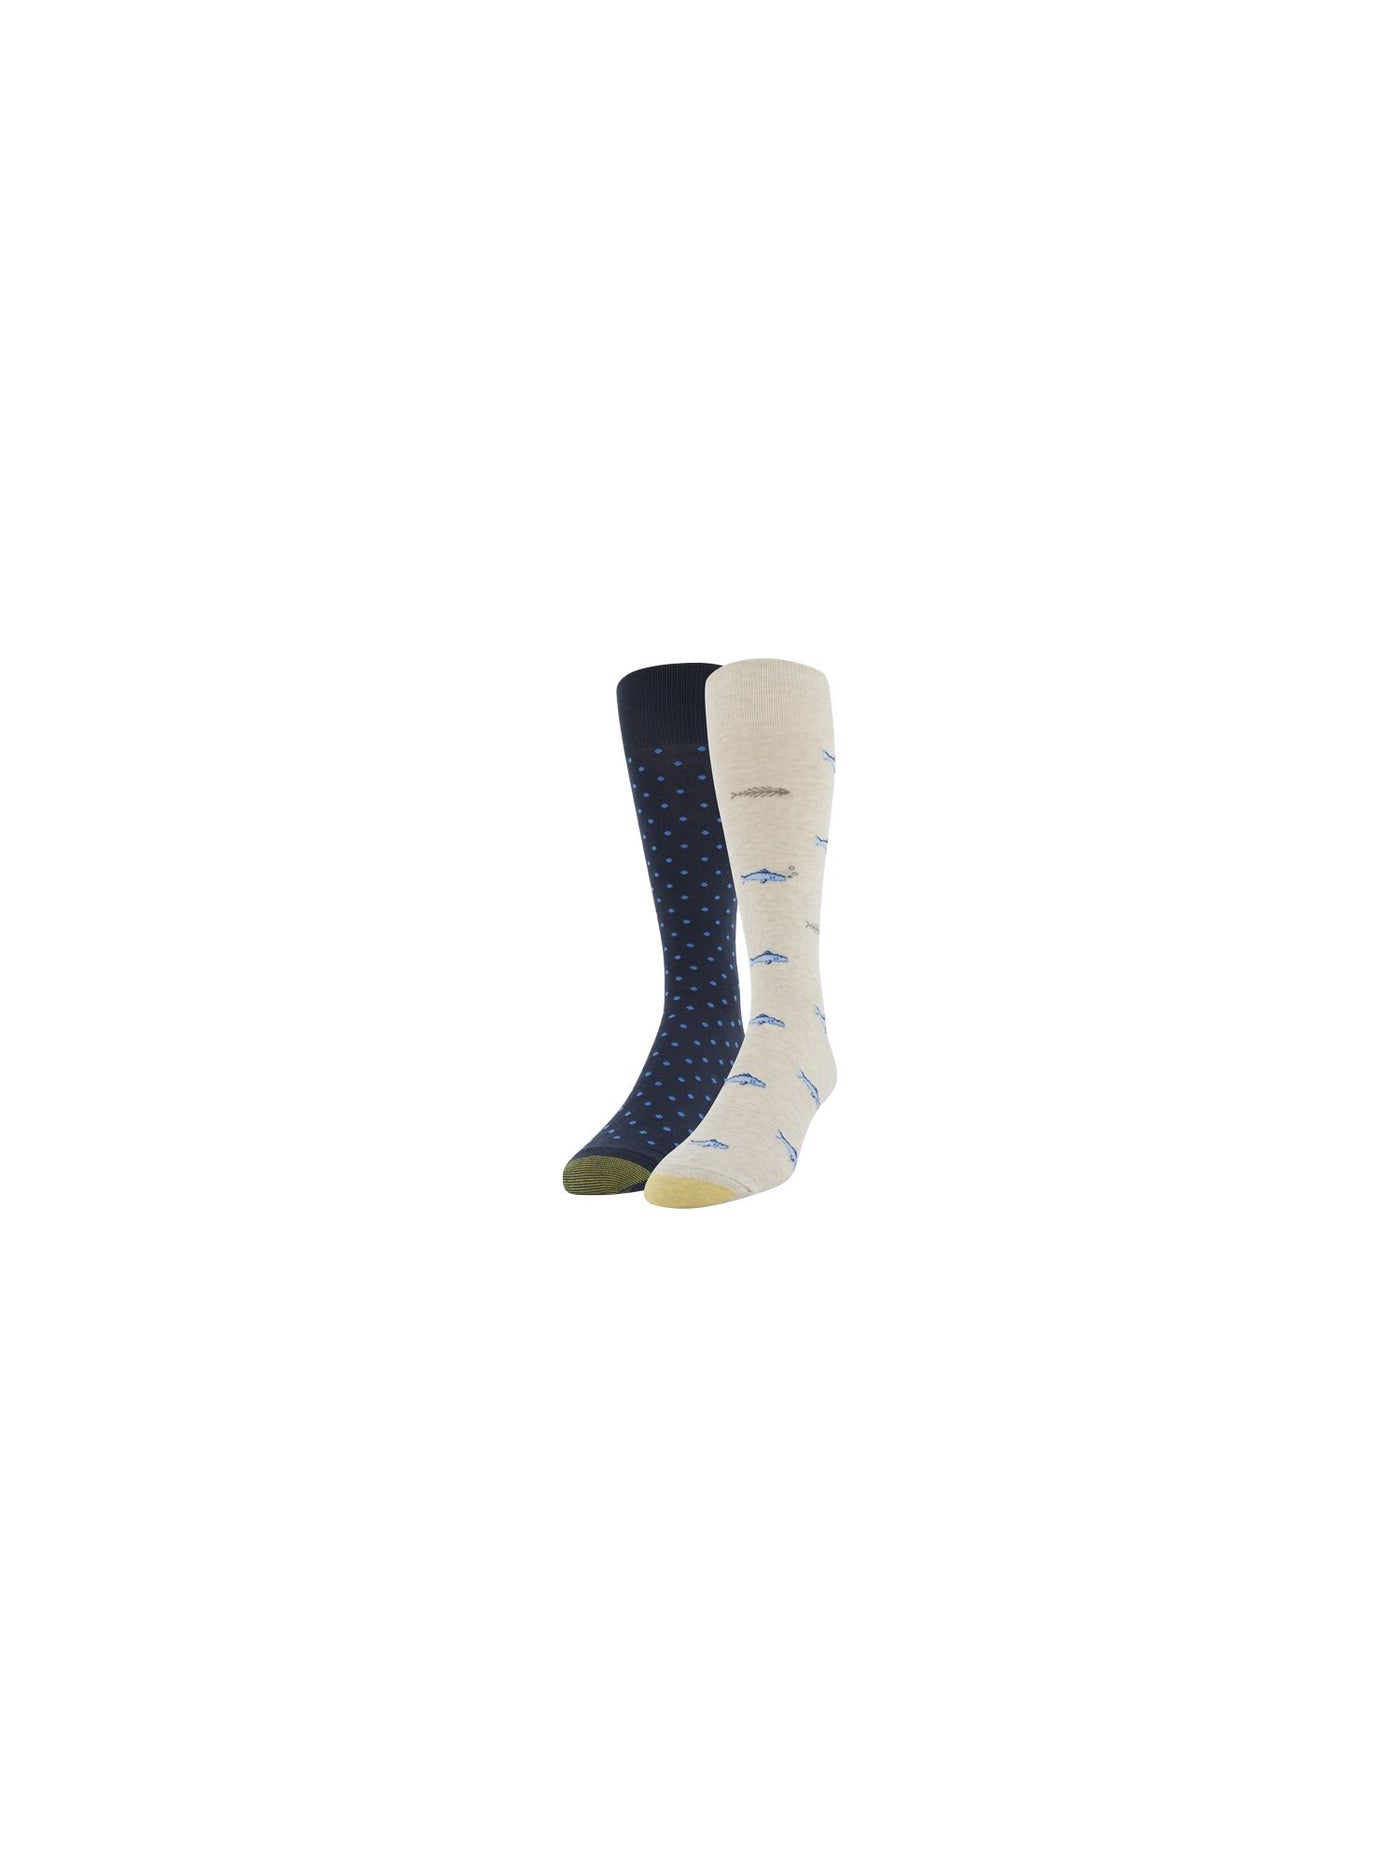 GOLD TOE Mens 2 Pack Beige Assorted Anti-Odor Dress Crew Socks 6-12.5